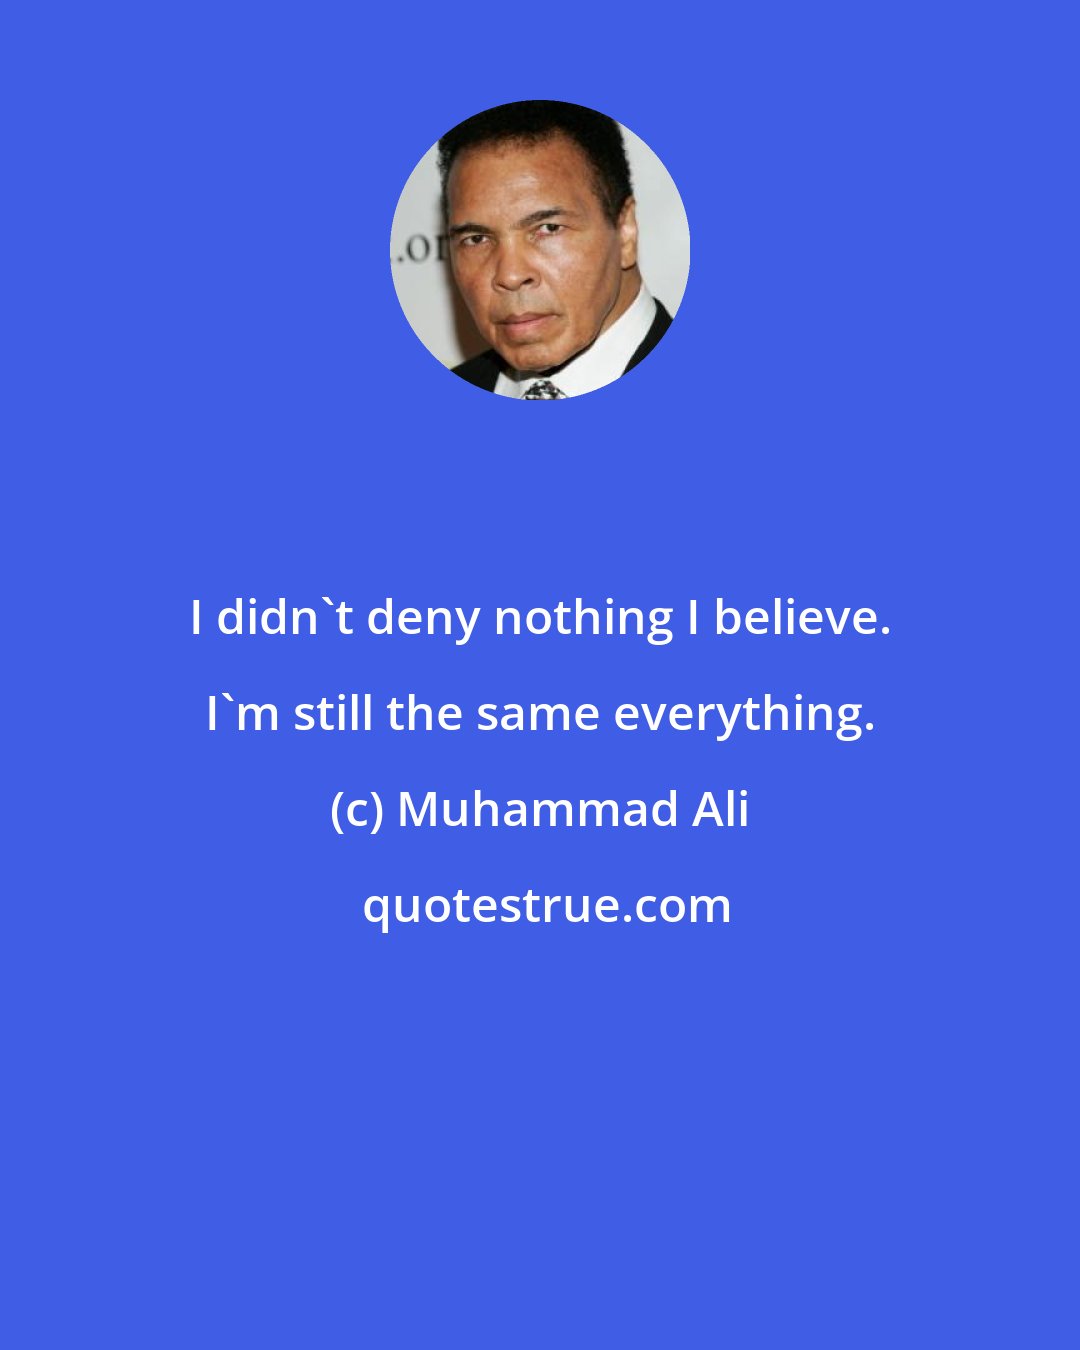 Muhammad Ali: I didn't deny nothing I believe. I'm still the same everything.